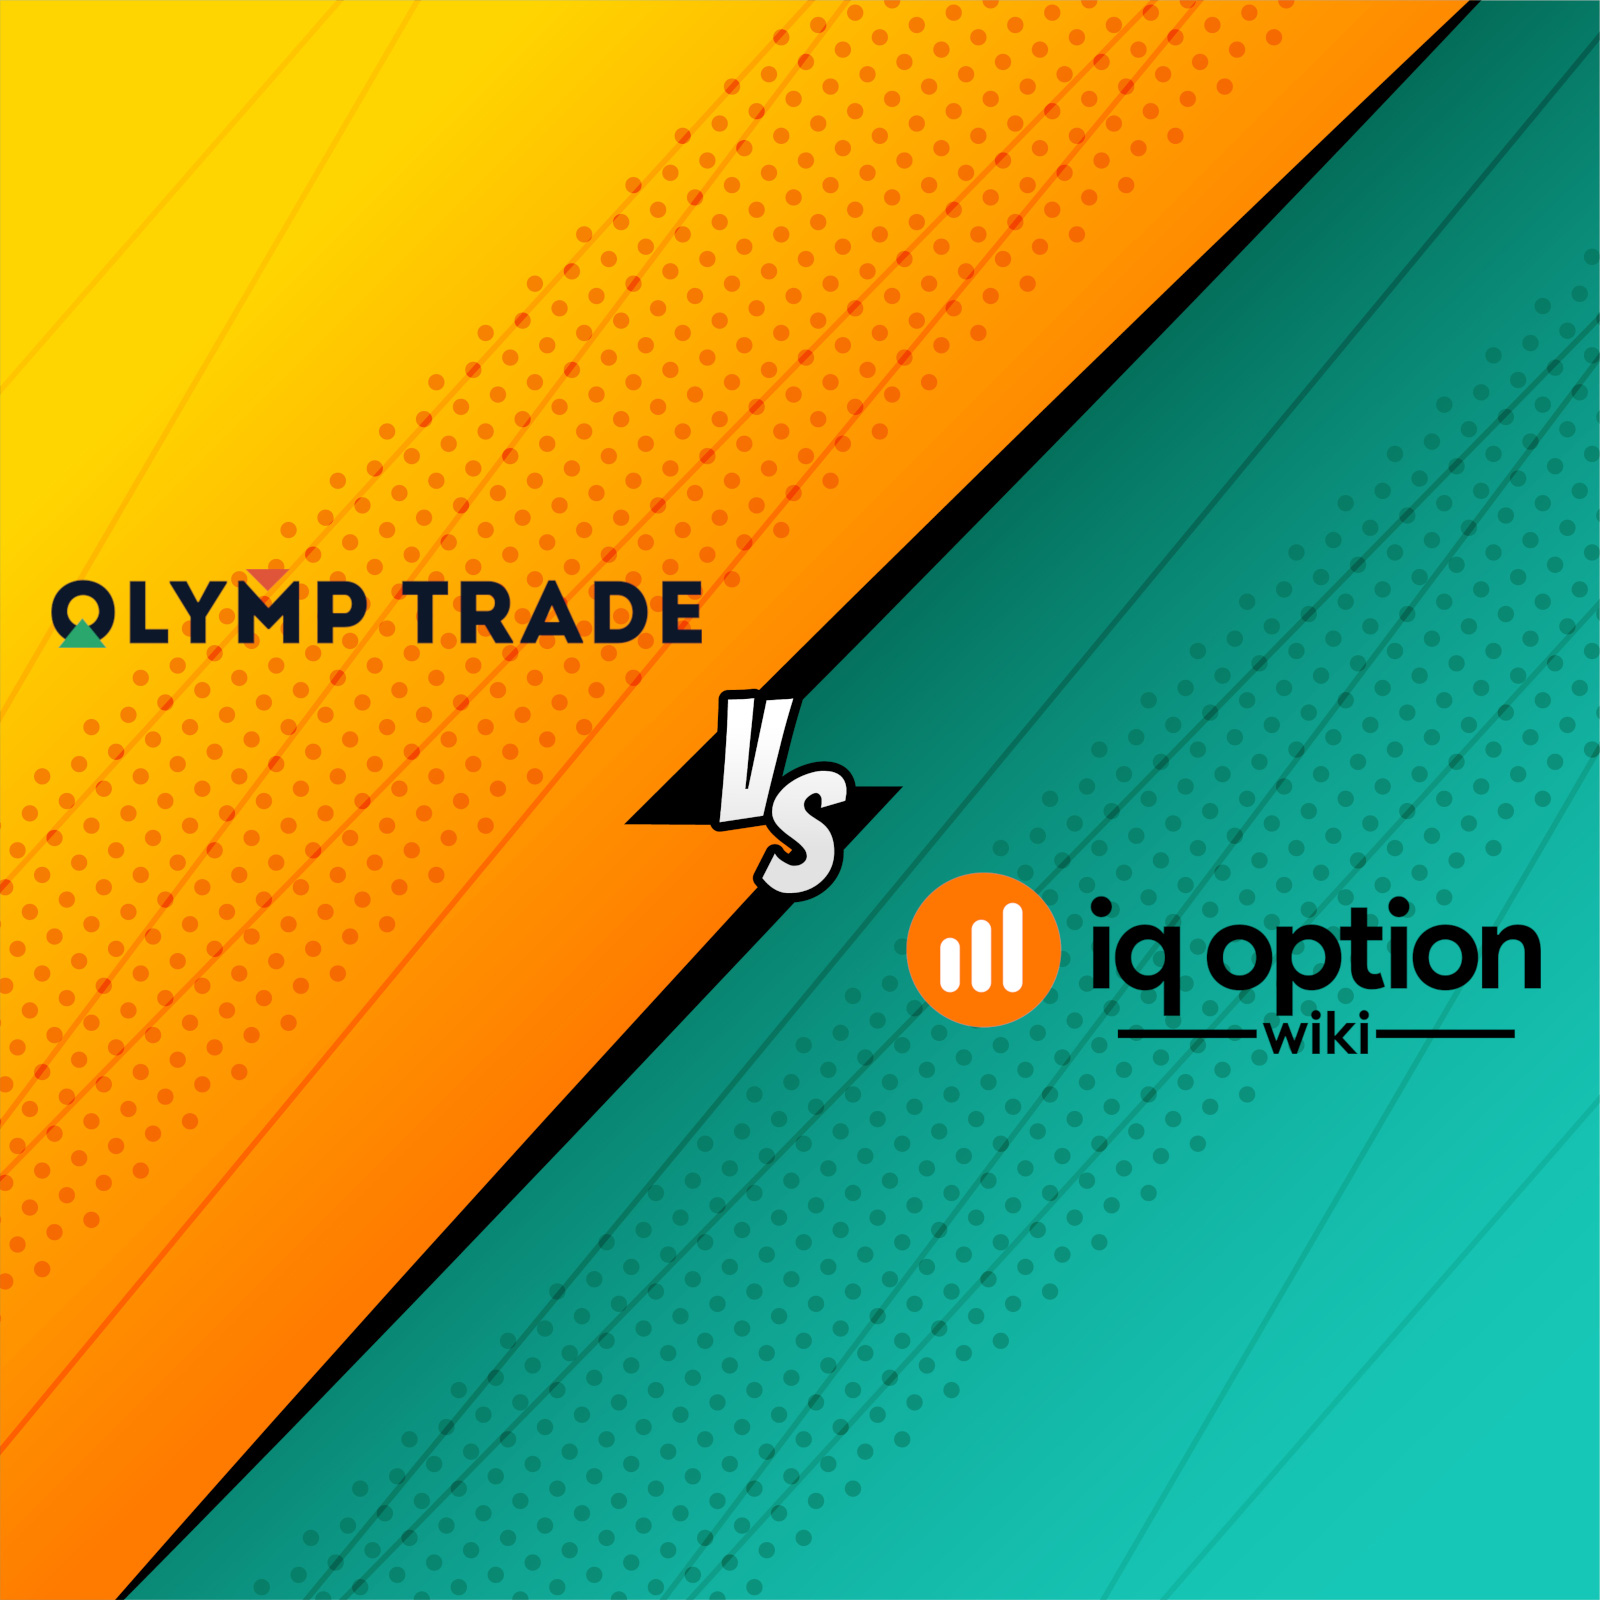 Iq Option Vs Olymp Trade Indepth Platform Research Iq Option Wiki